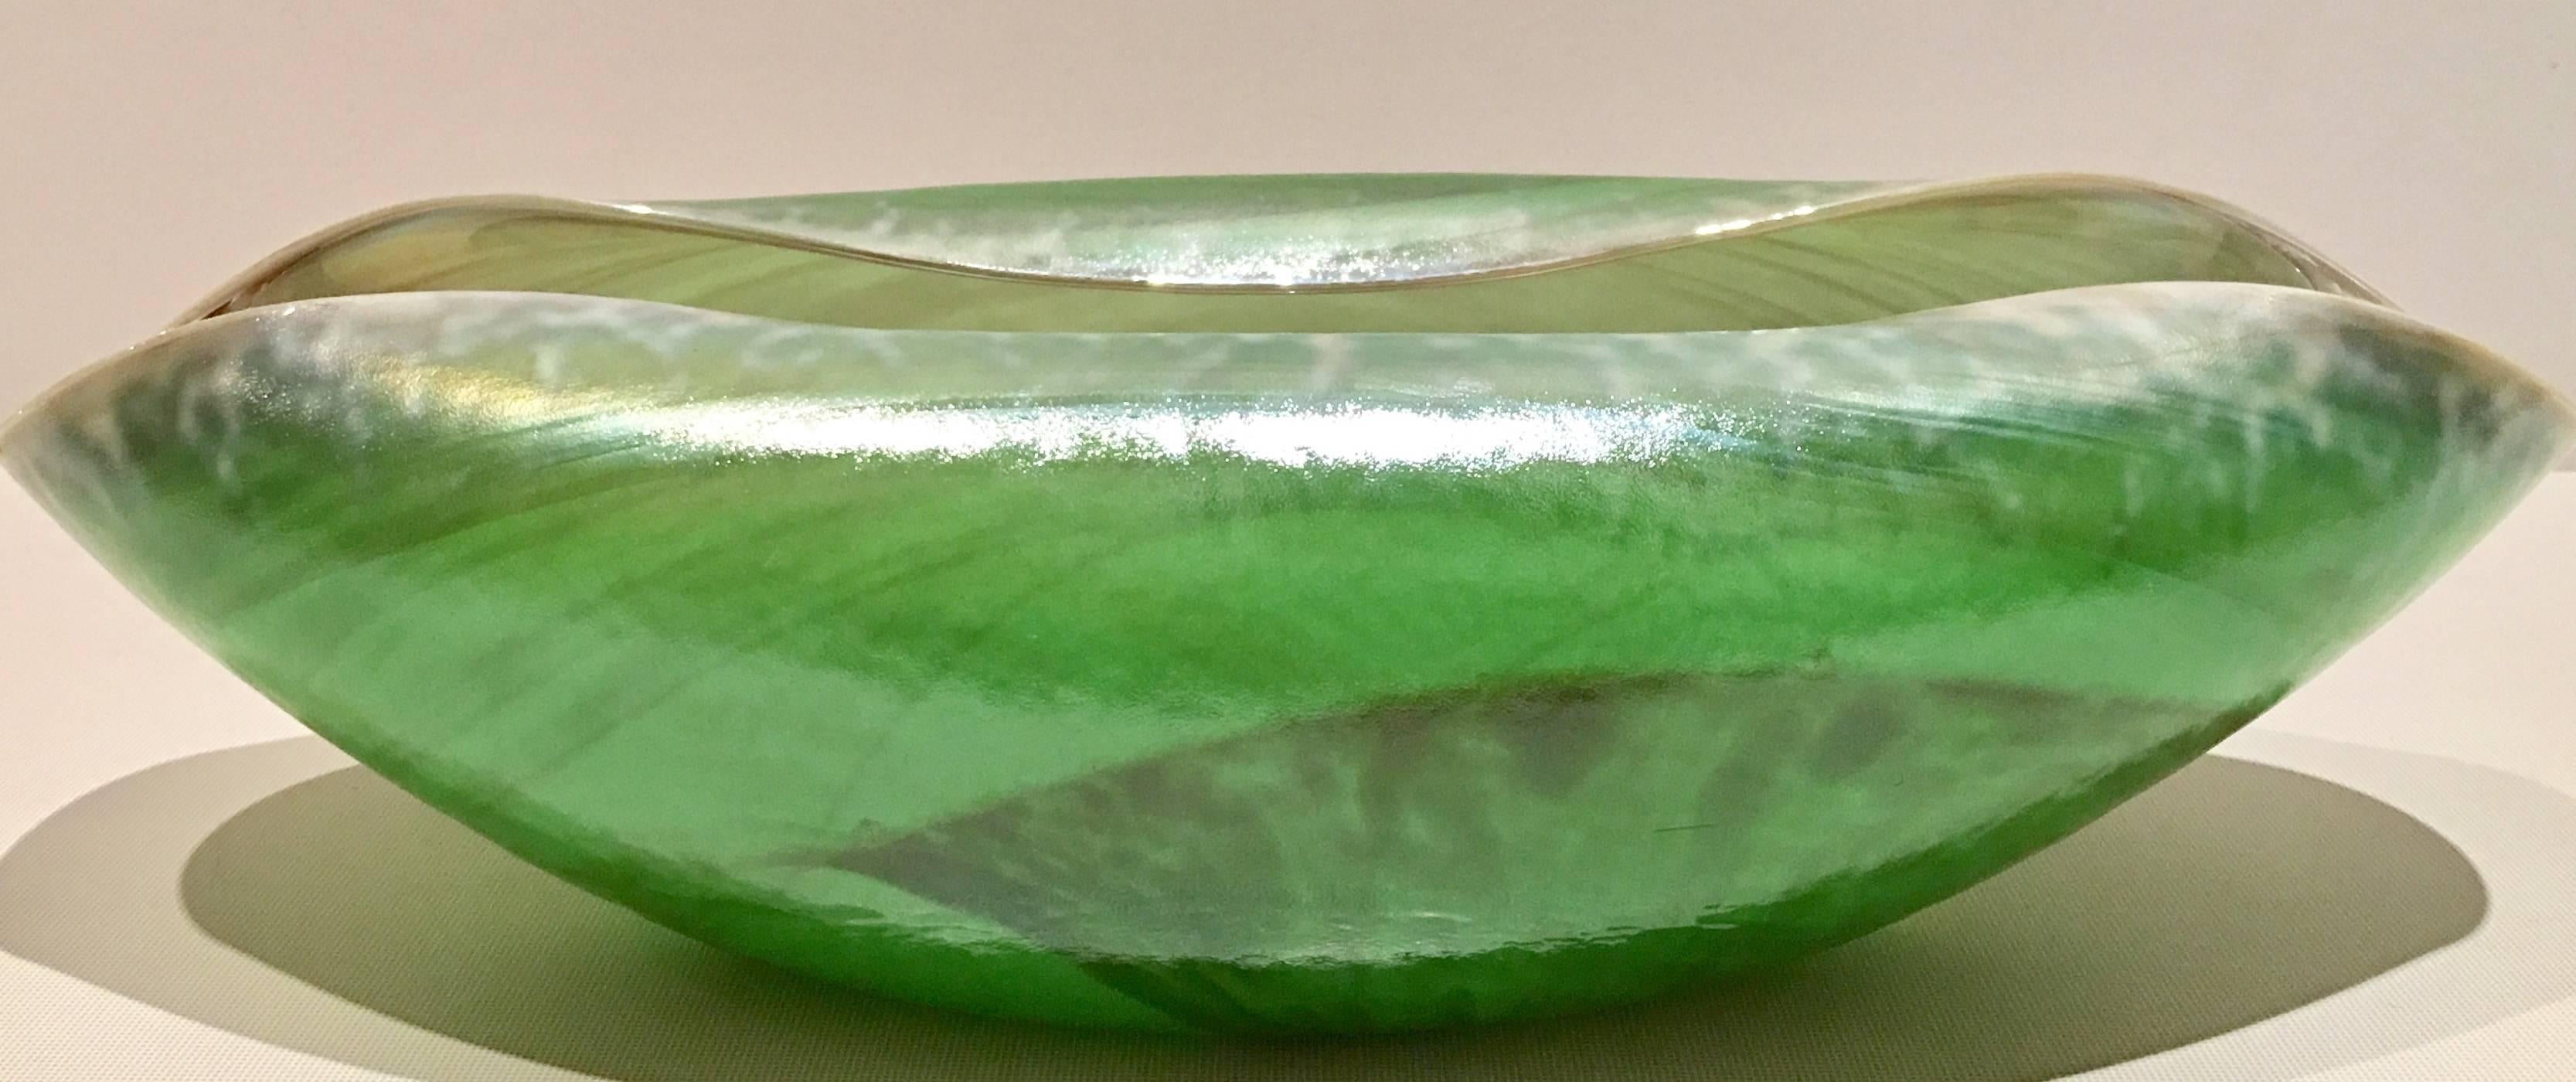 Rare organic form shell Italian Murano glass green and pink iridescent rainbow bowl. Partial original manufacturer sticker present.